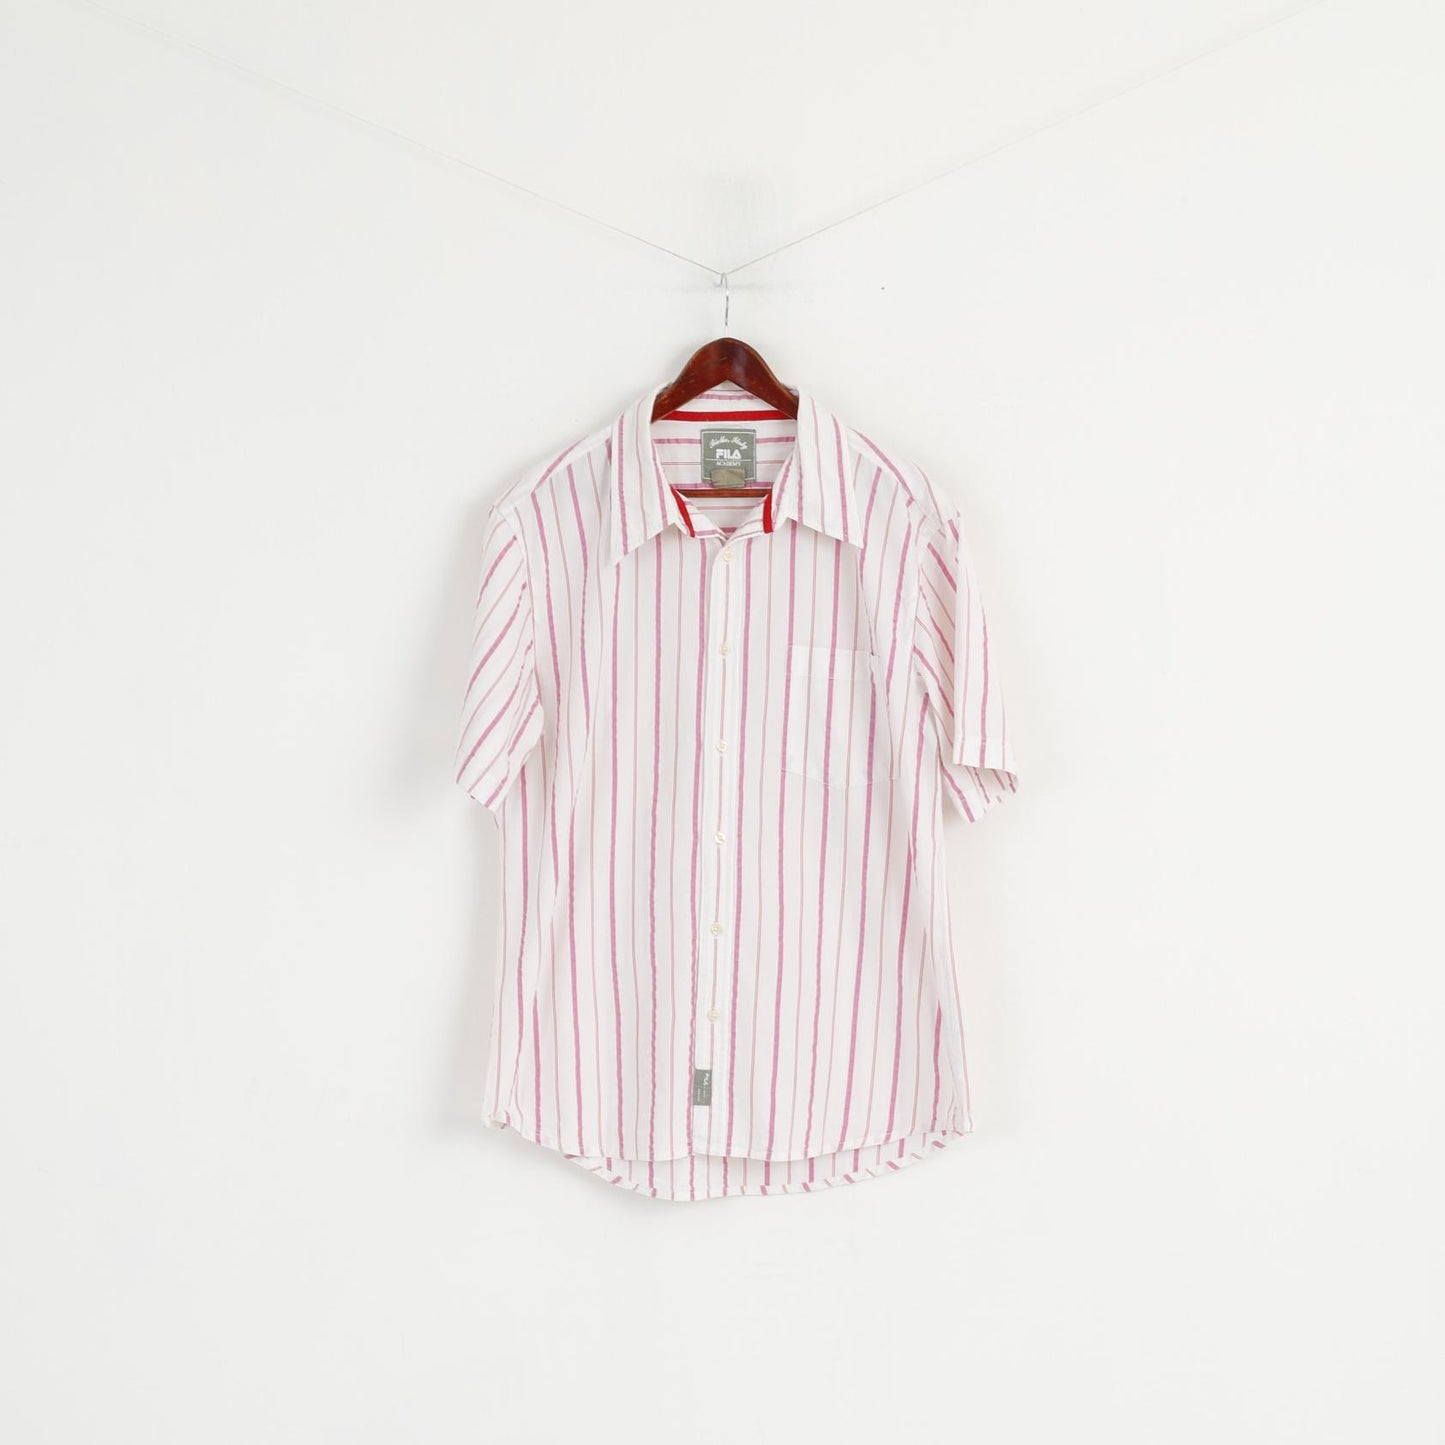 Fila Academy Men XL Casual Shirt White Pink Striped Biella Italy Cotton Top